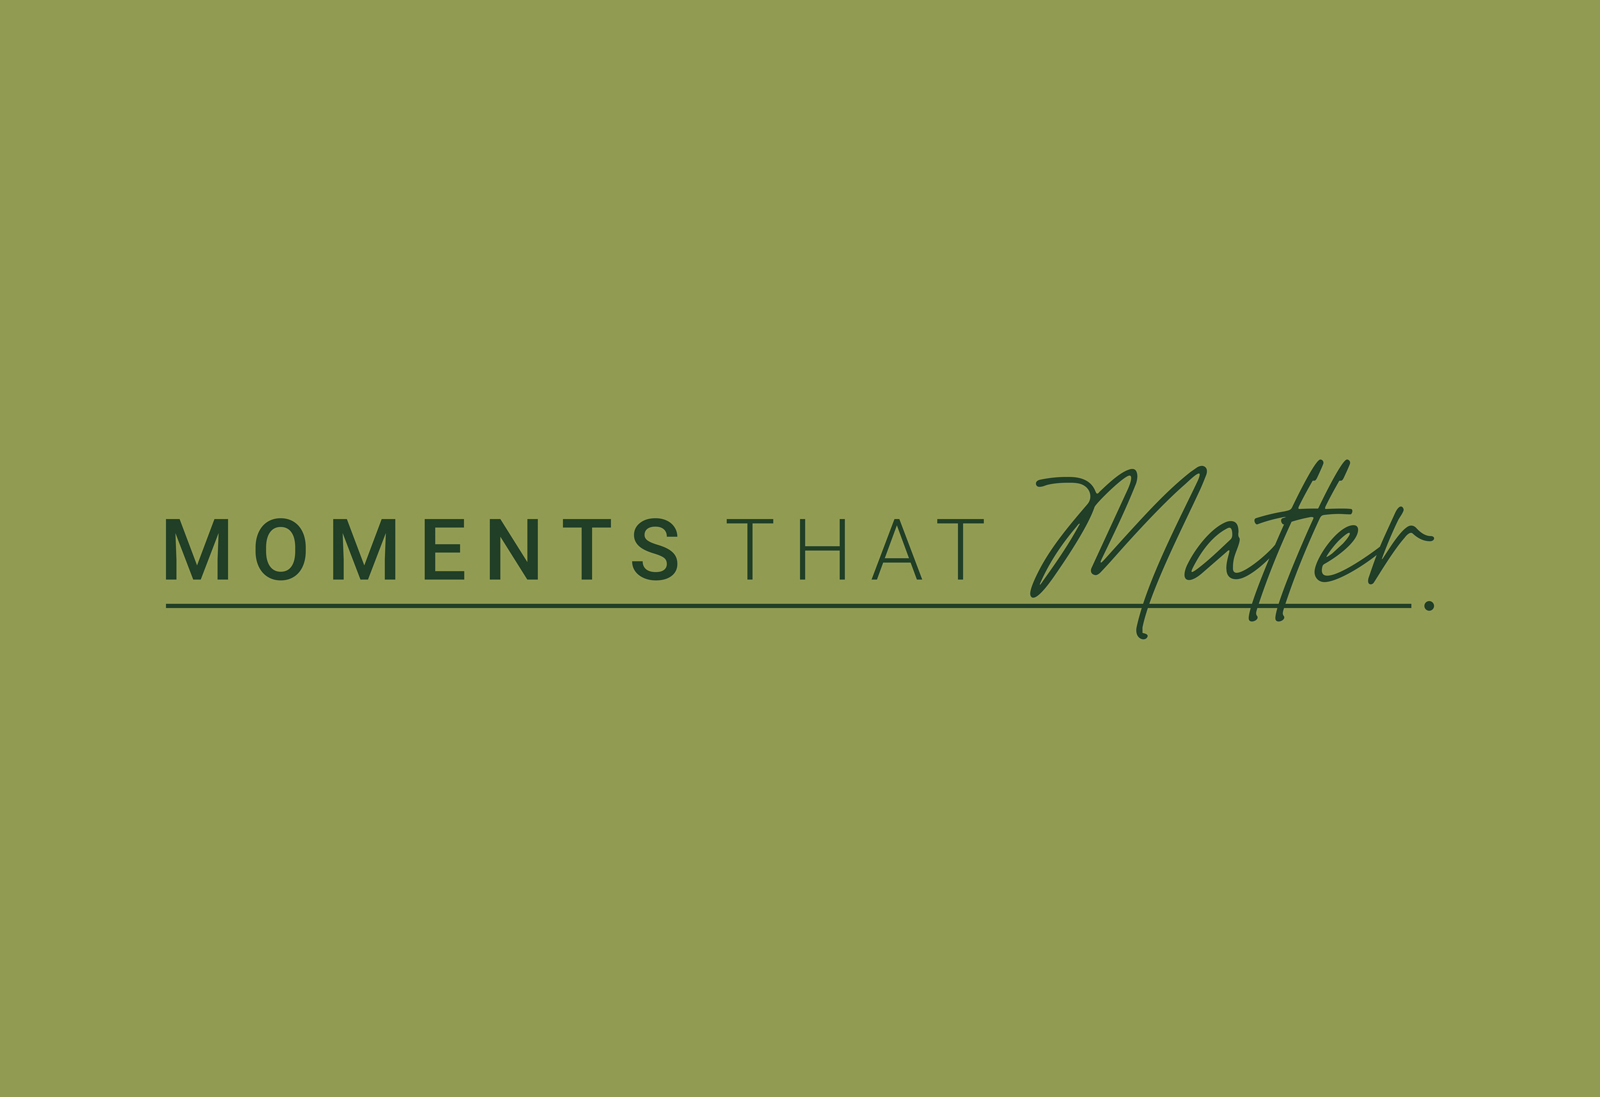 Moments that Matter